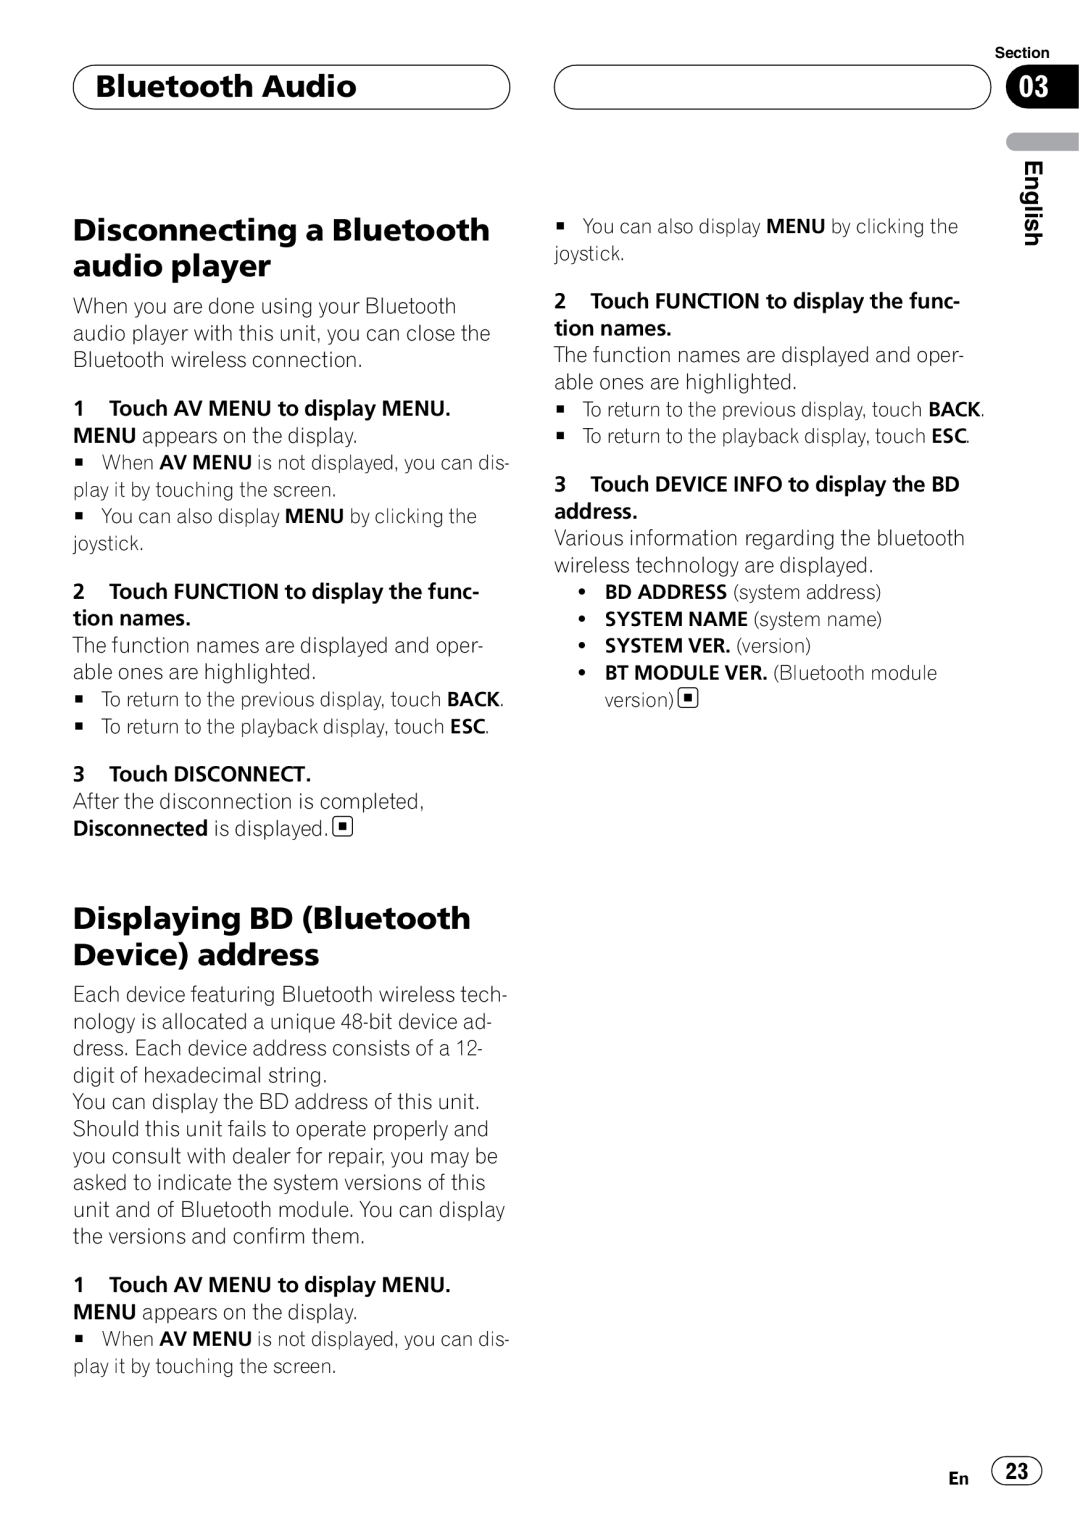 Pioneer CD-BTB100 Bluetooth Audio Disconnecting a Bluetooth audio player, Displaying BD Bluetooth Device address, English 